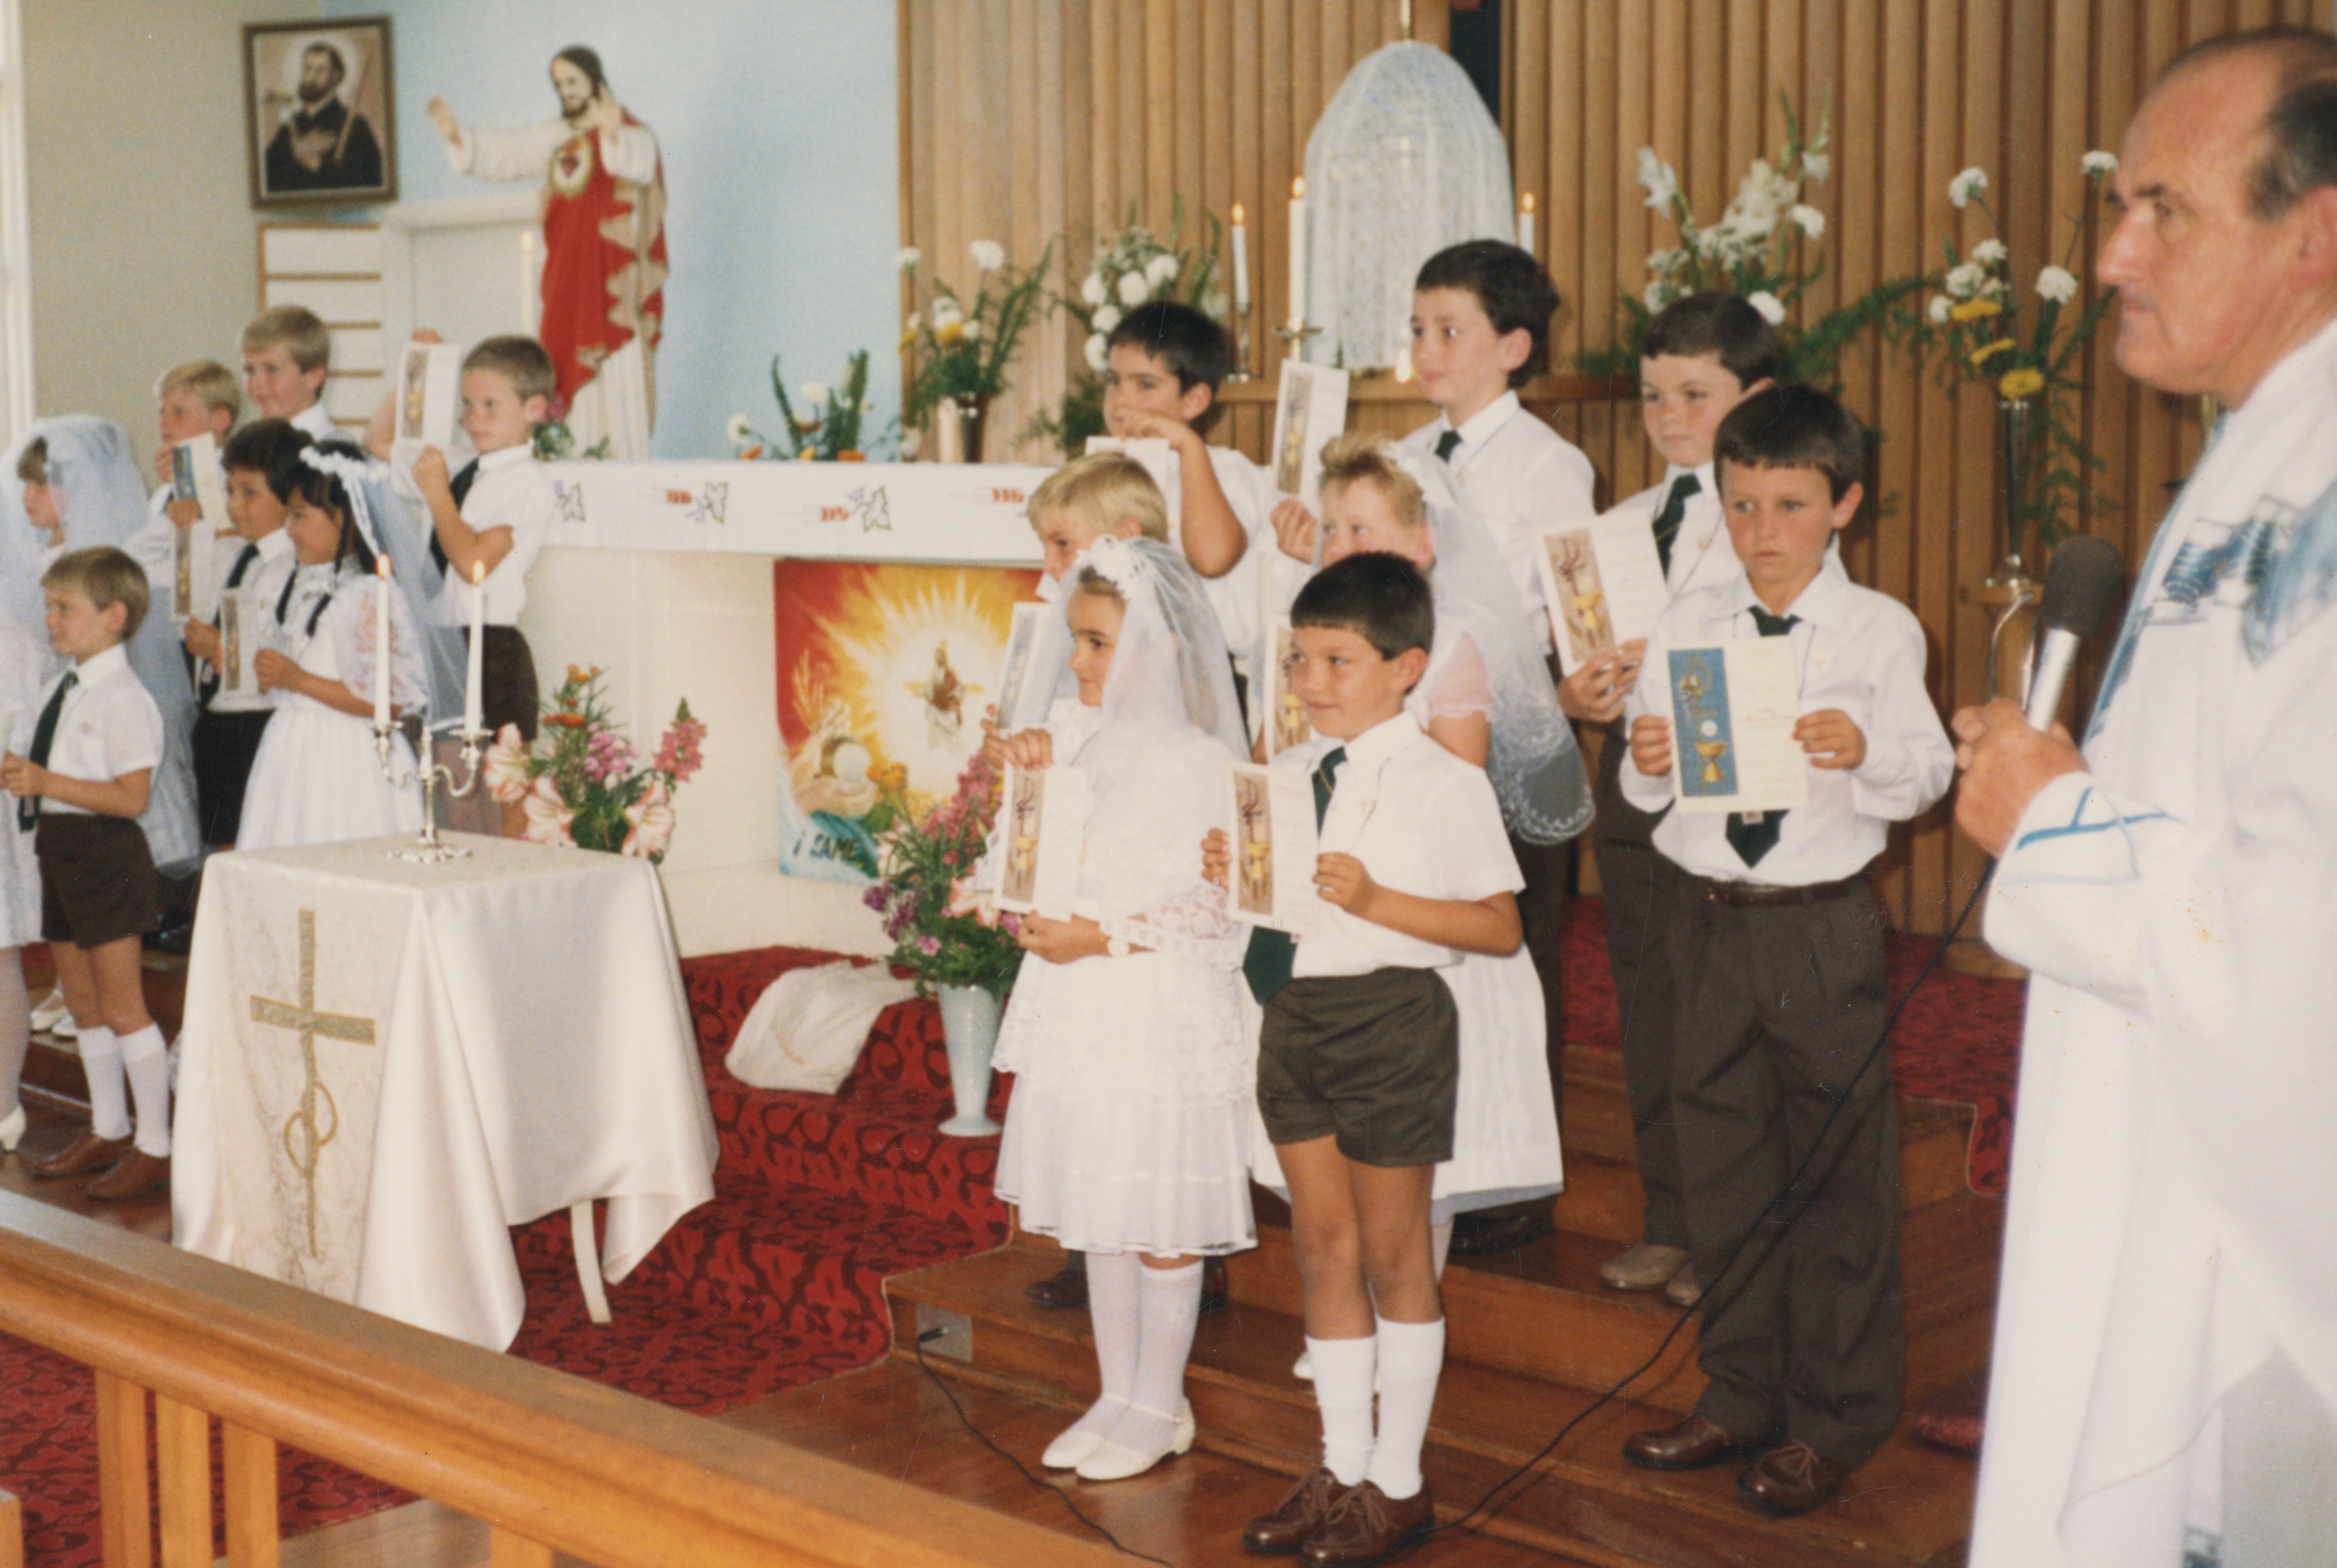 Holy Communion ceremony at St Francis Xavier’s Church, Lurnea